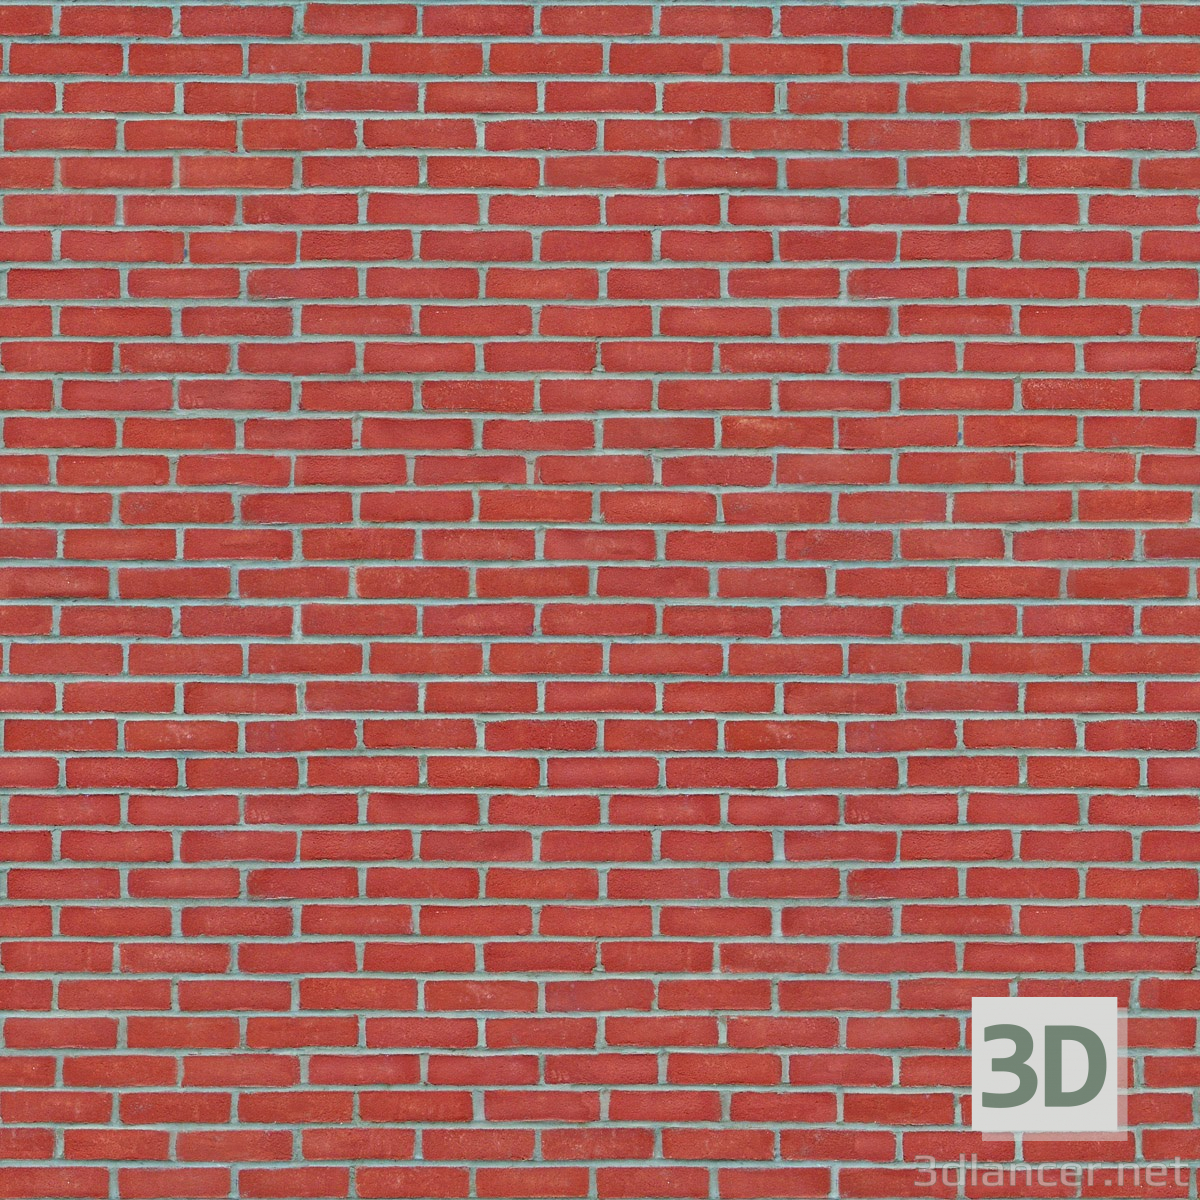 Texture brickwork 003 free download - image